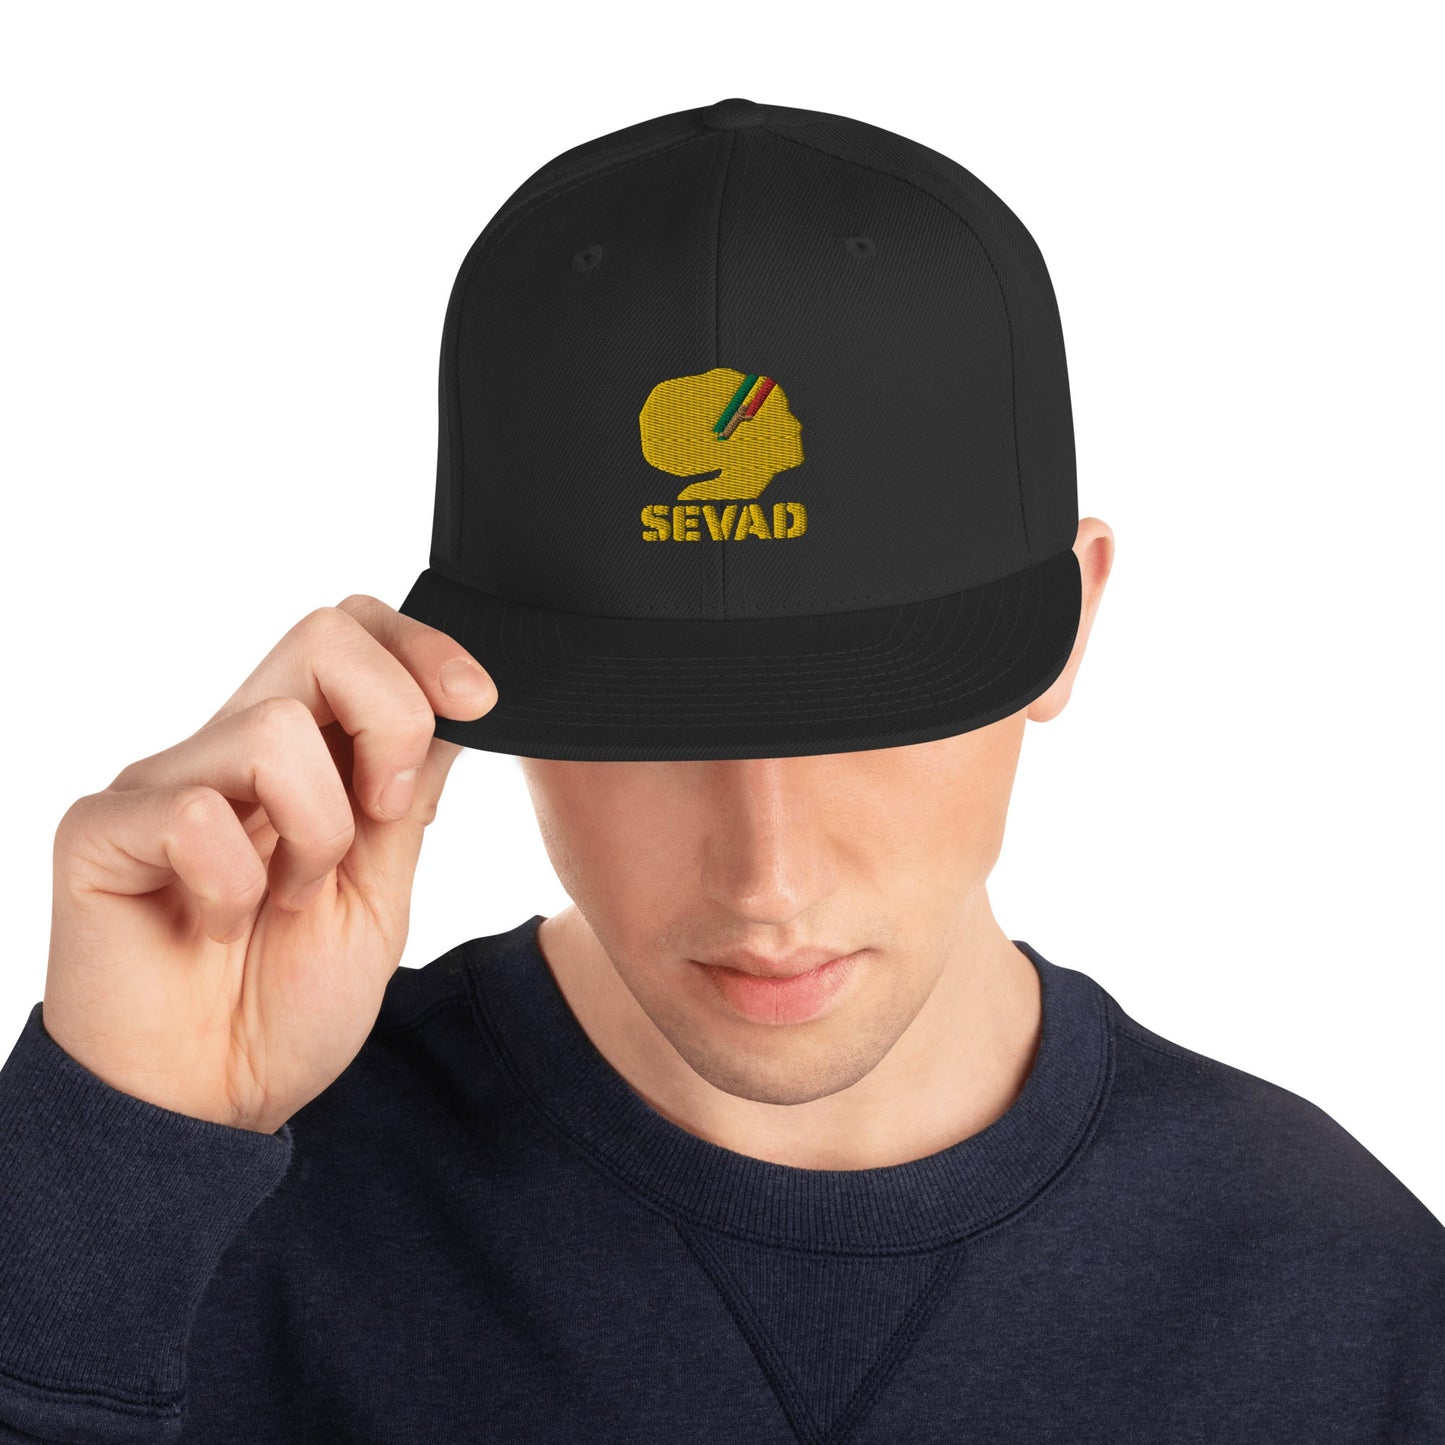 SEVAD Snapback Hat - SEVAD MUSIC HOUSE - Snapback Hat - SEVAD MUSIC HOUSE - 7123262_4792 - Black - - SEVAD Snapback Hat